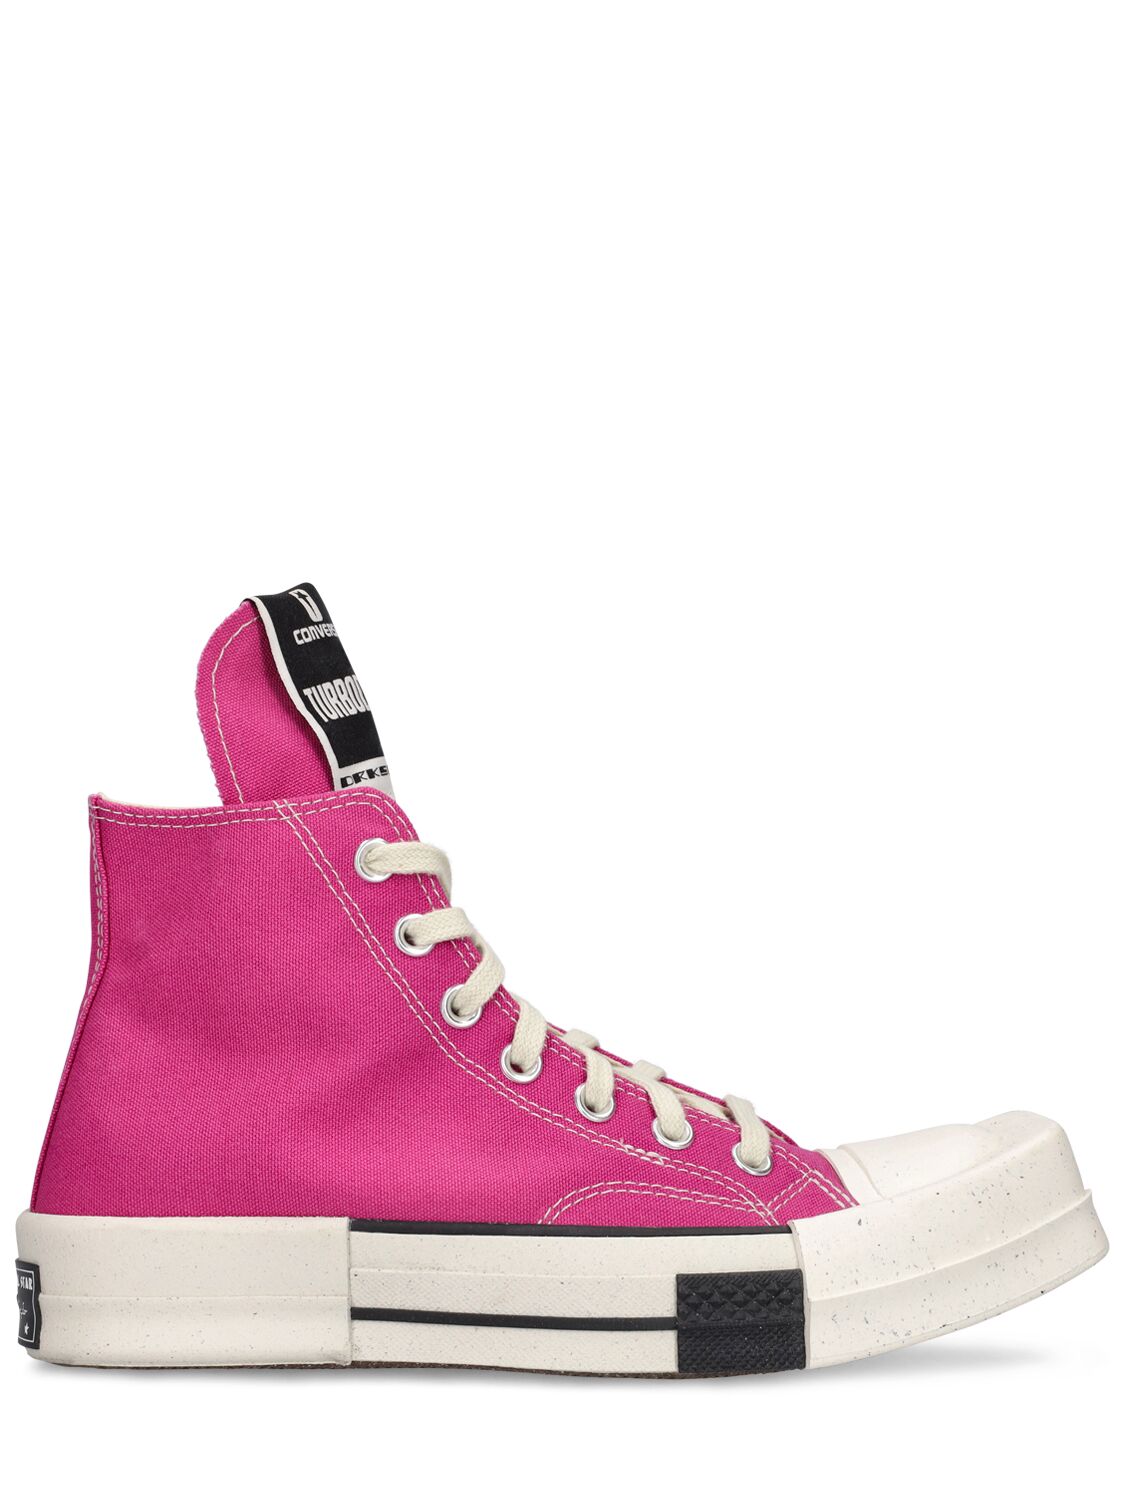 Drkshdw X Converse Turbodrk Laceless Sneakers In Hot Pink